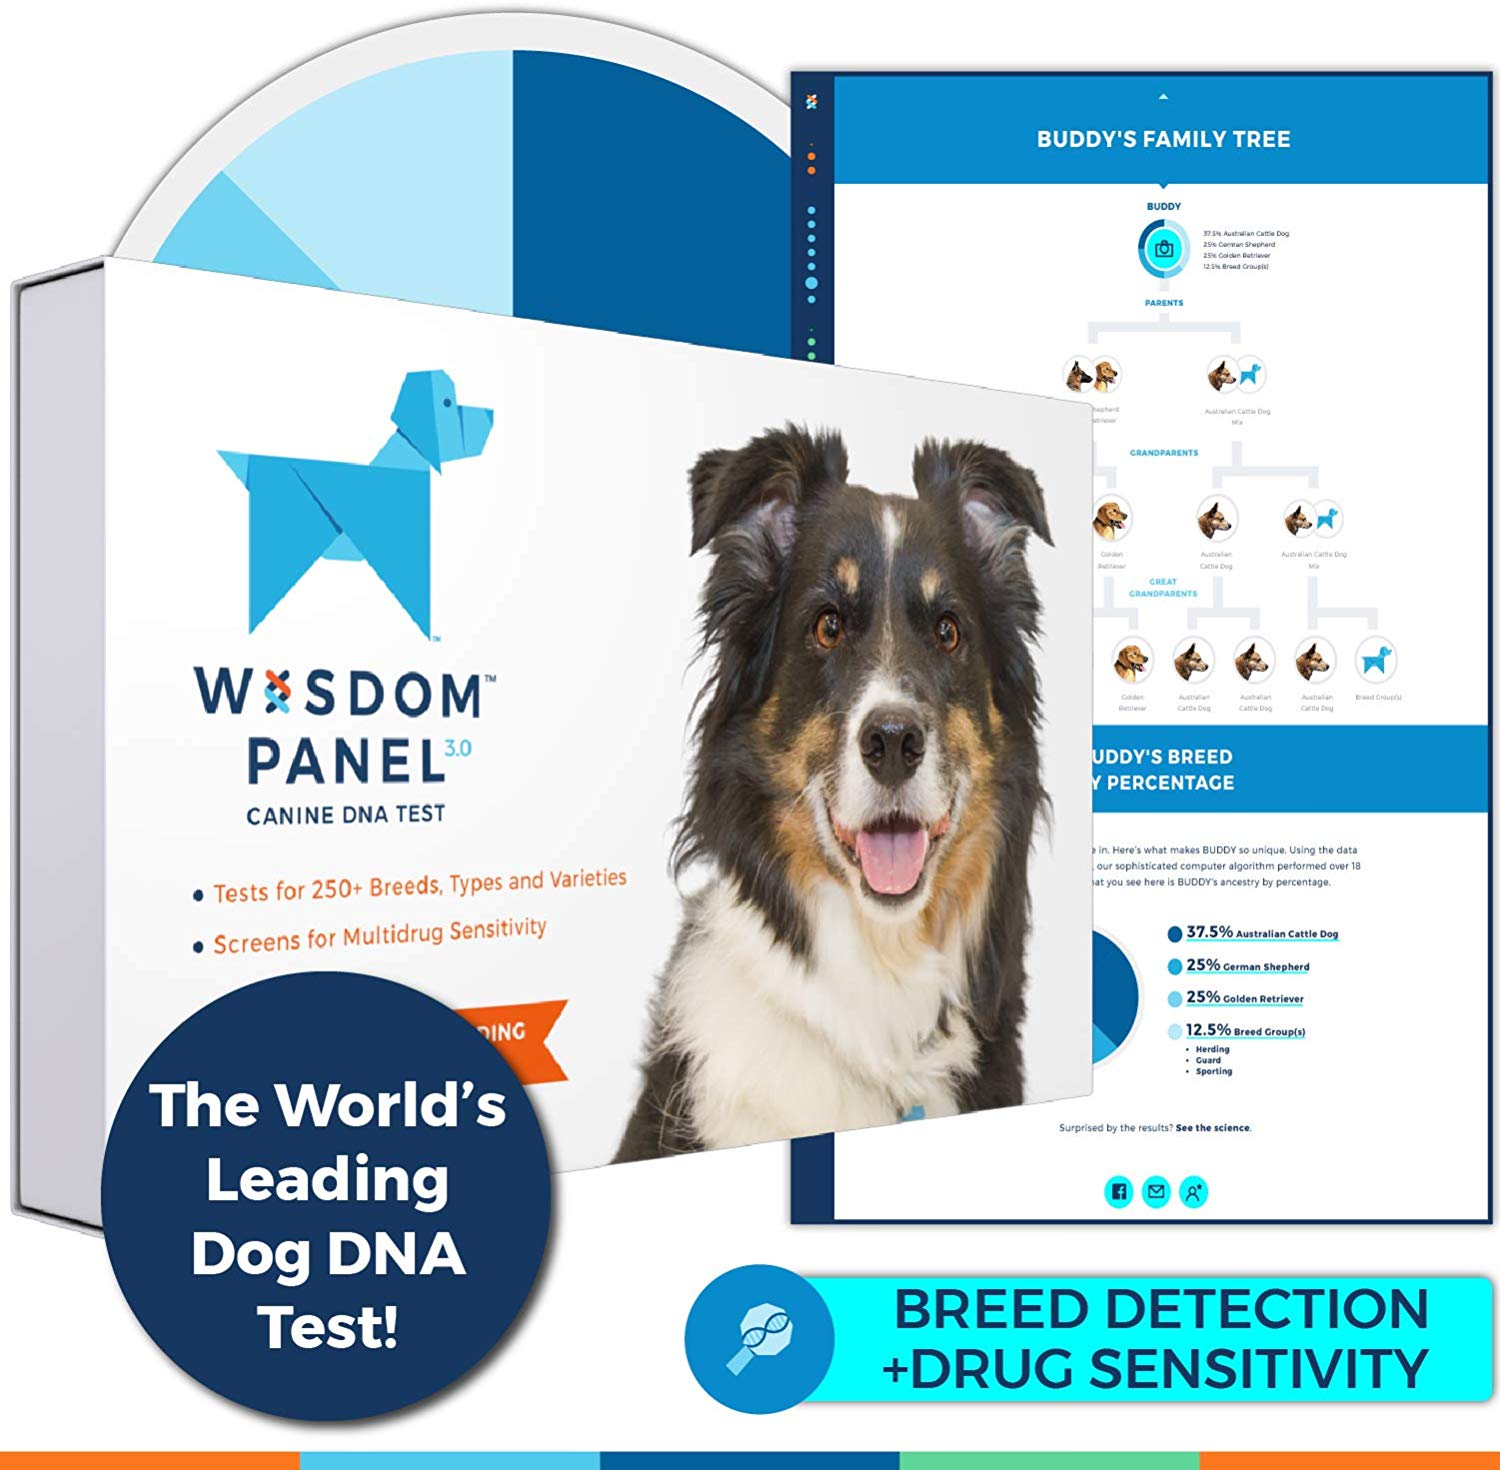 Wisdom Panel 3.0 Canine DNA Test